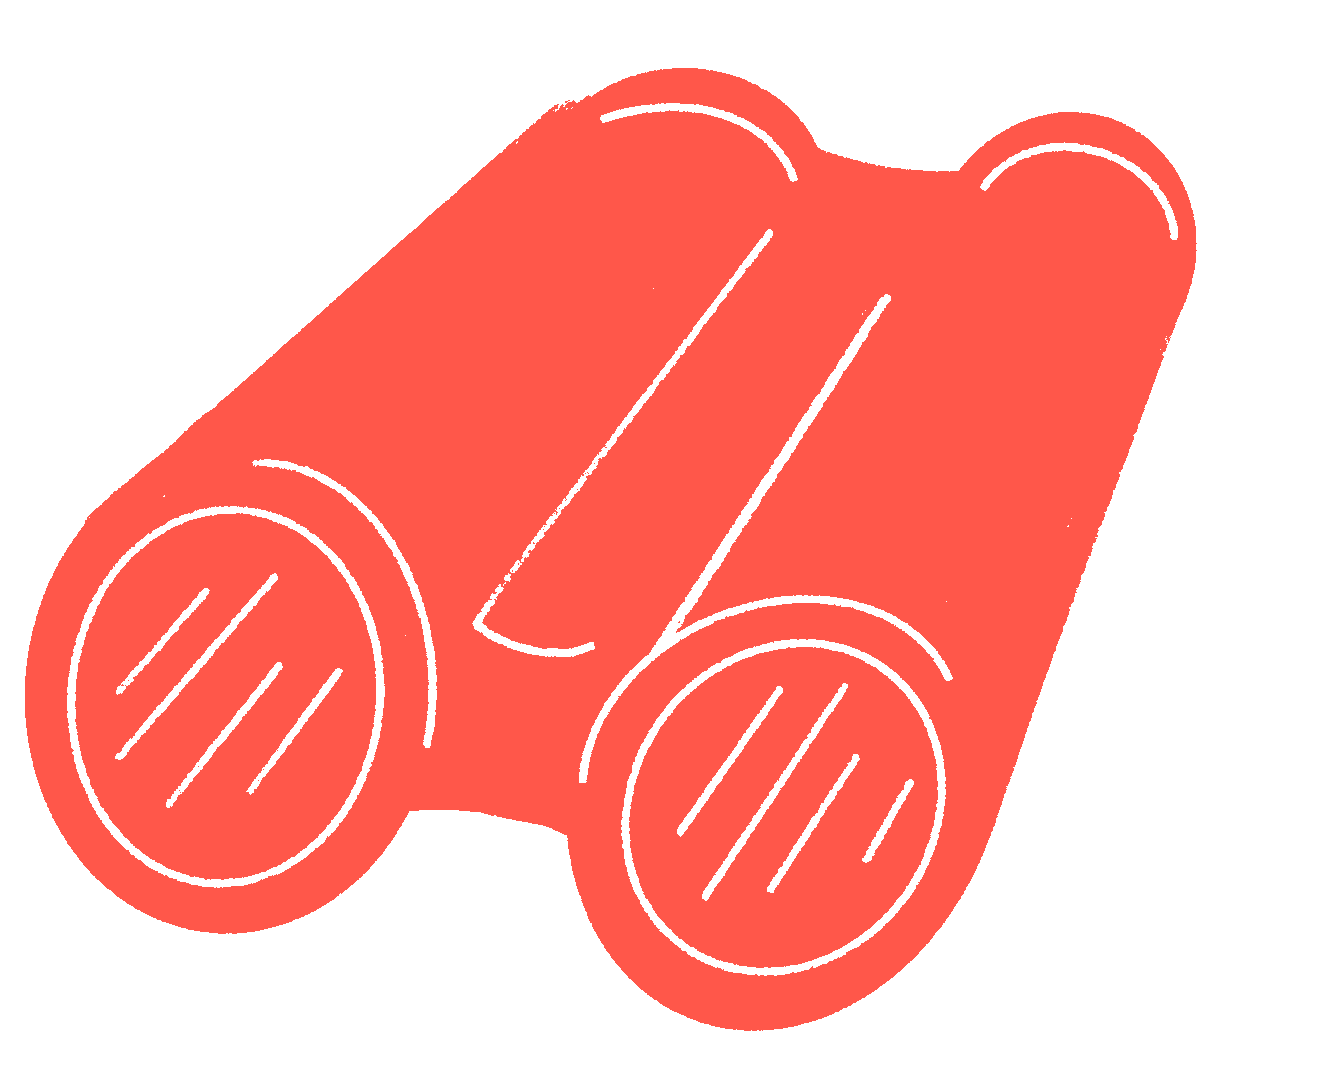 A hand drawn illustration of binoculars